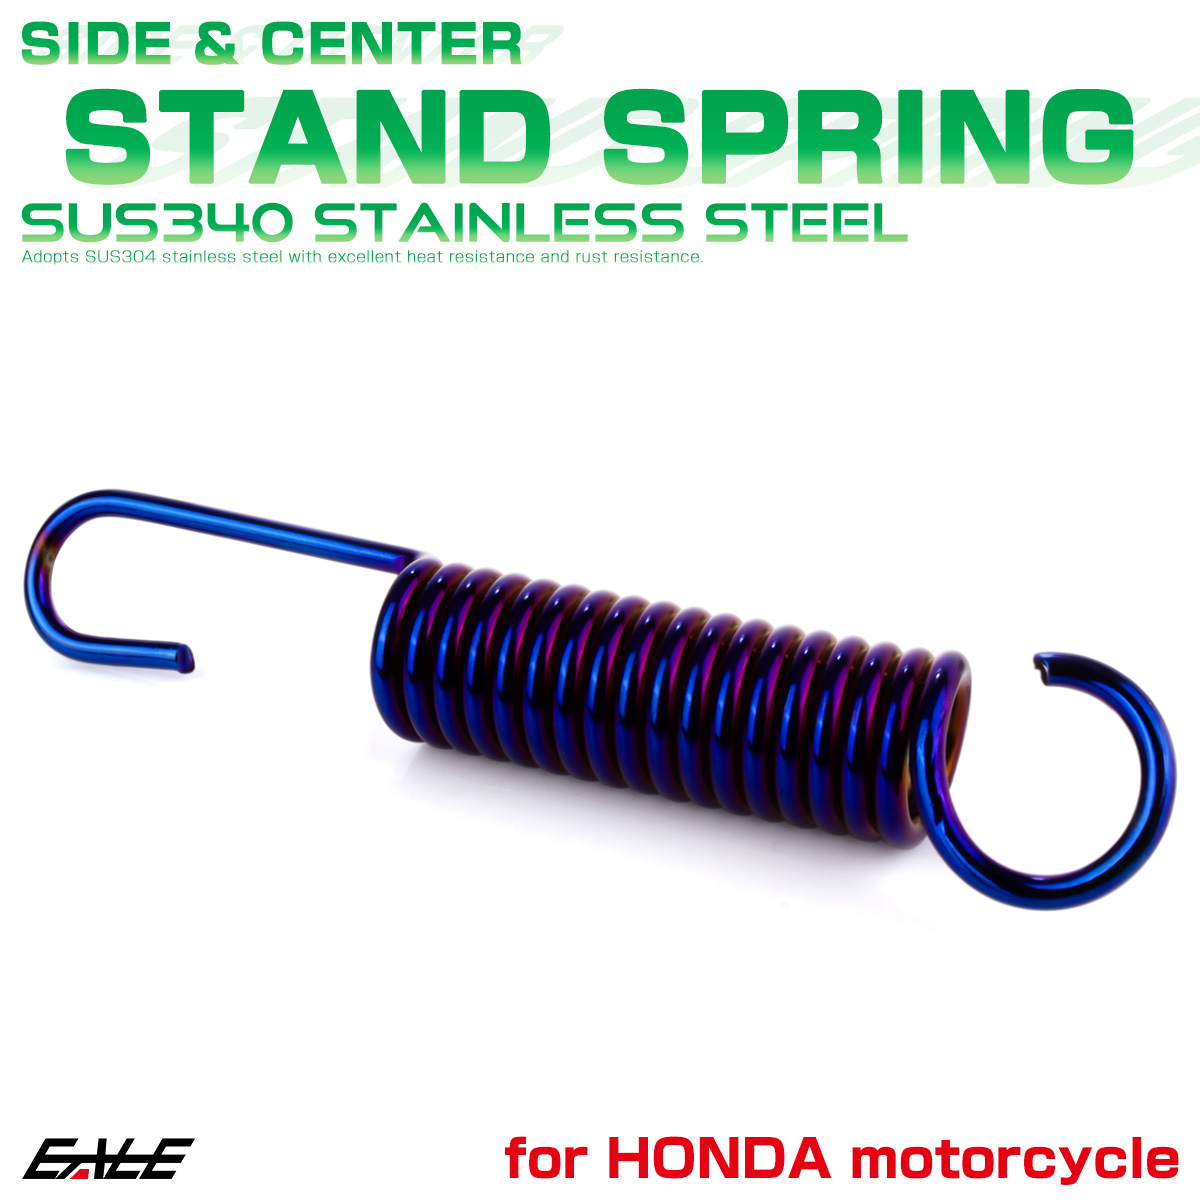  side stand springs 105mm Honda car for bike SUS304 stainless steel roasting titanium color TE0029